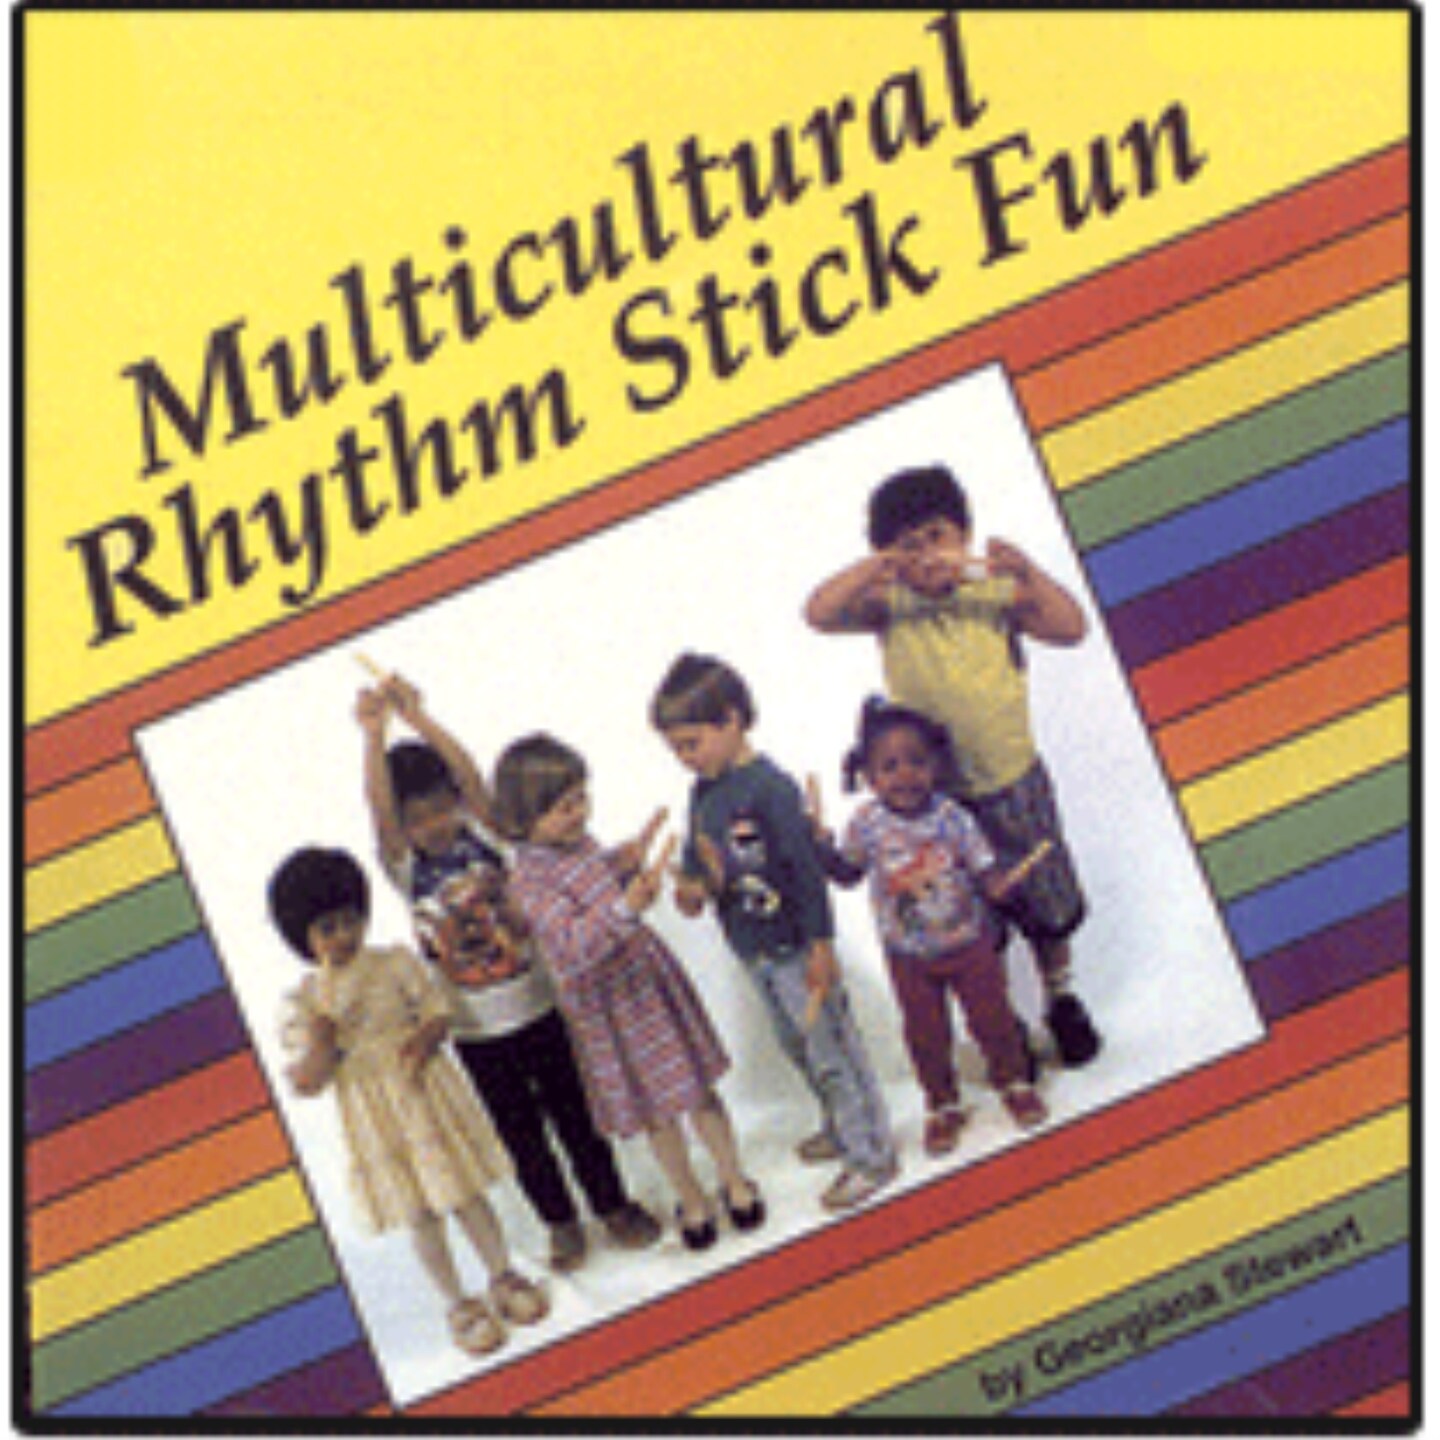 Multicultural Rhythm Stick Fun Educational CD